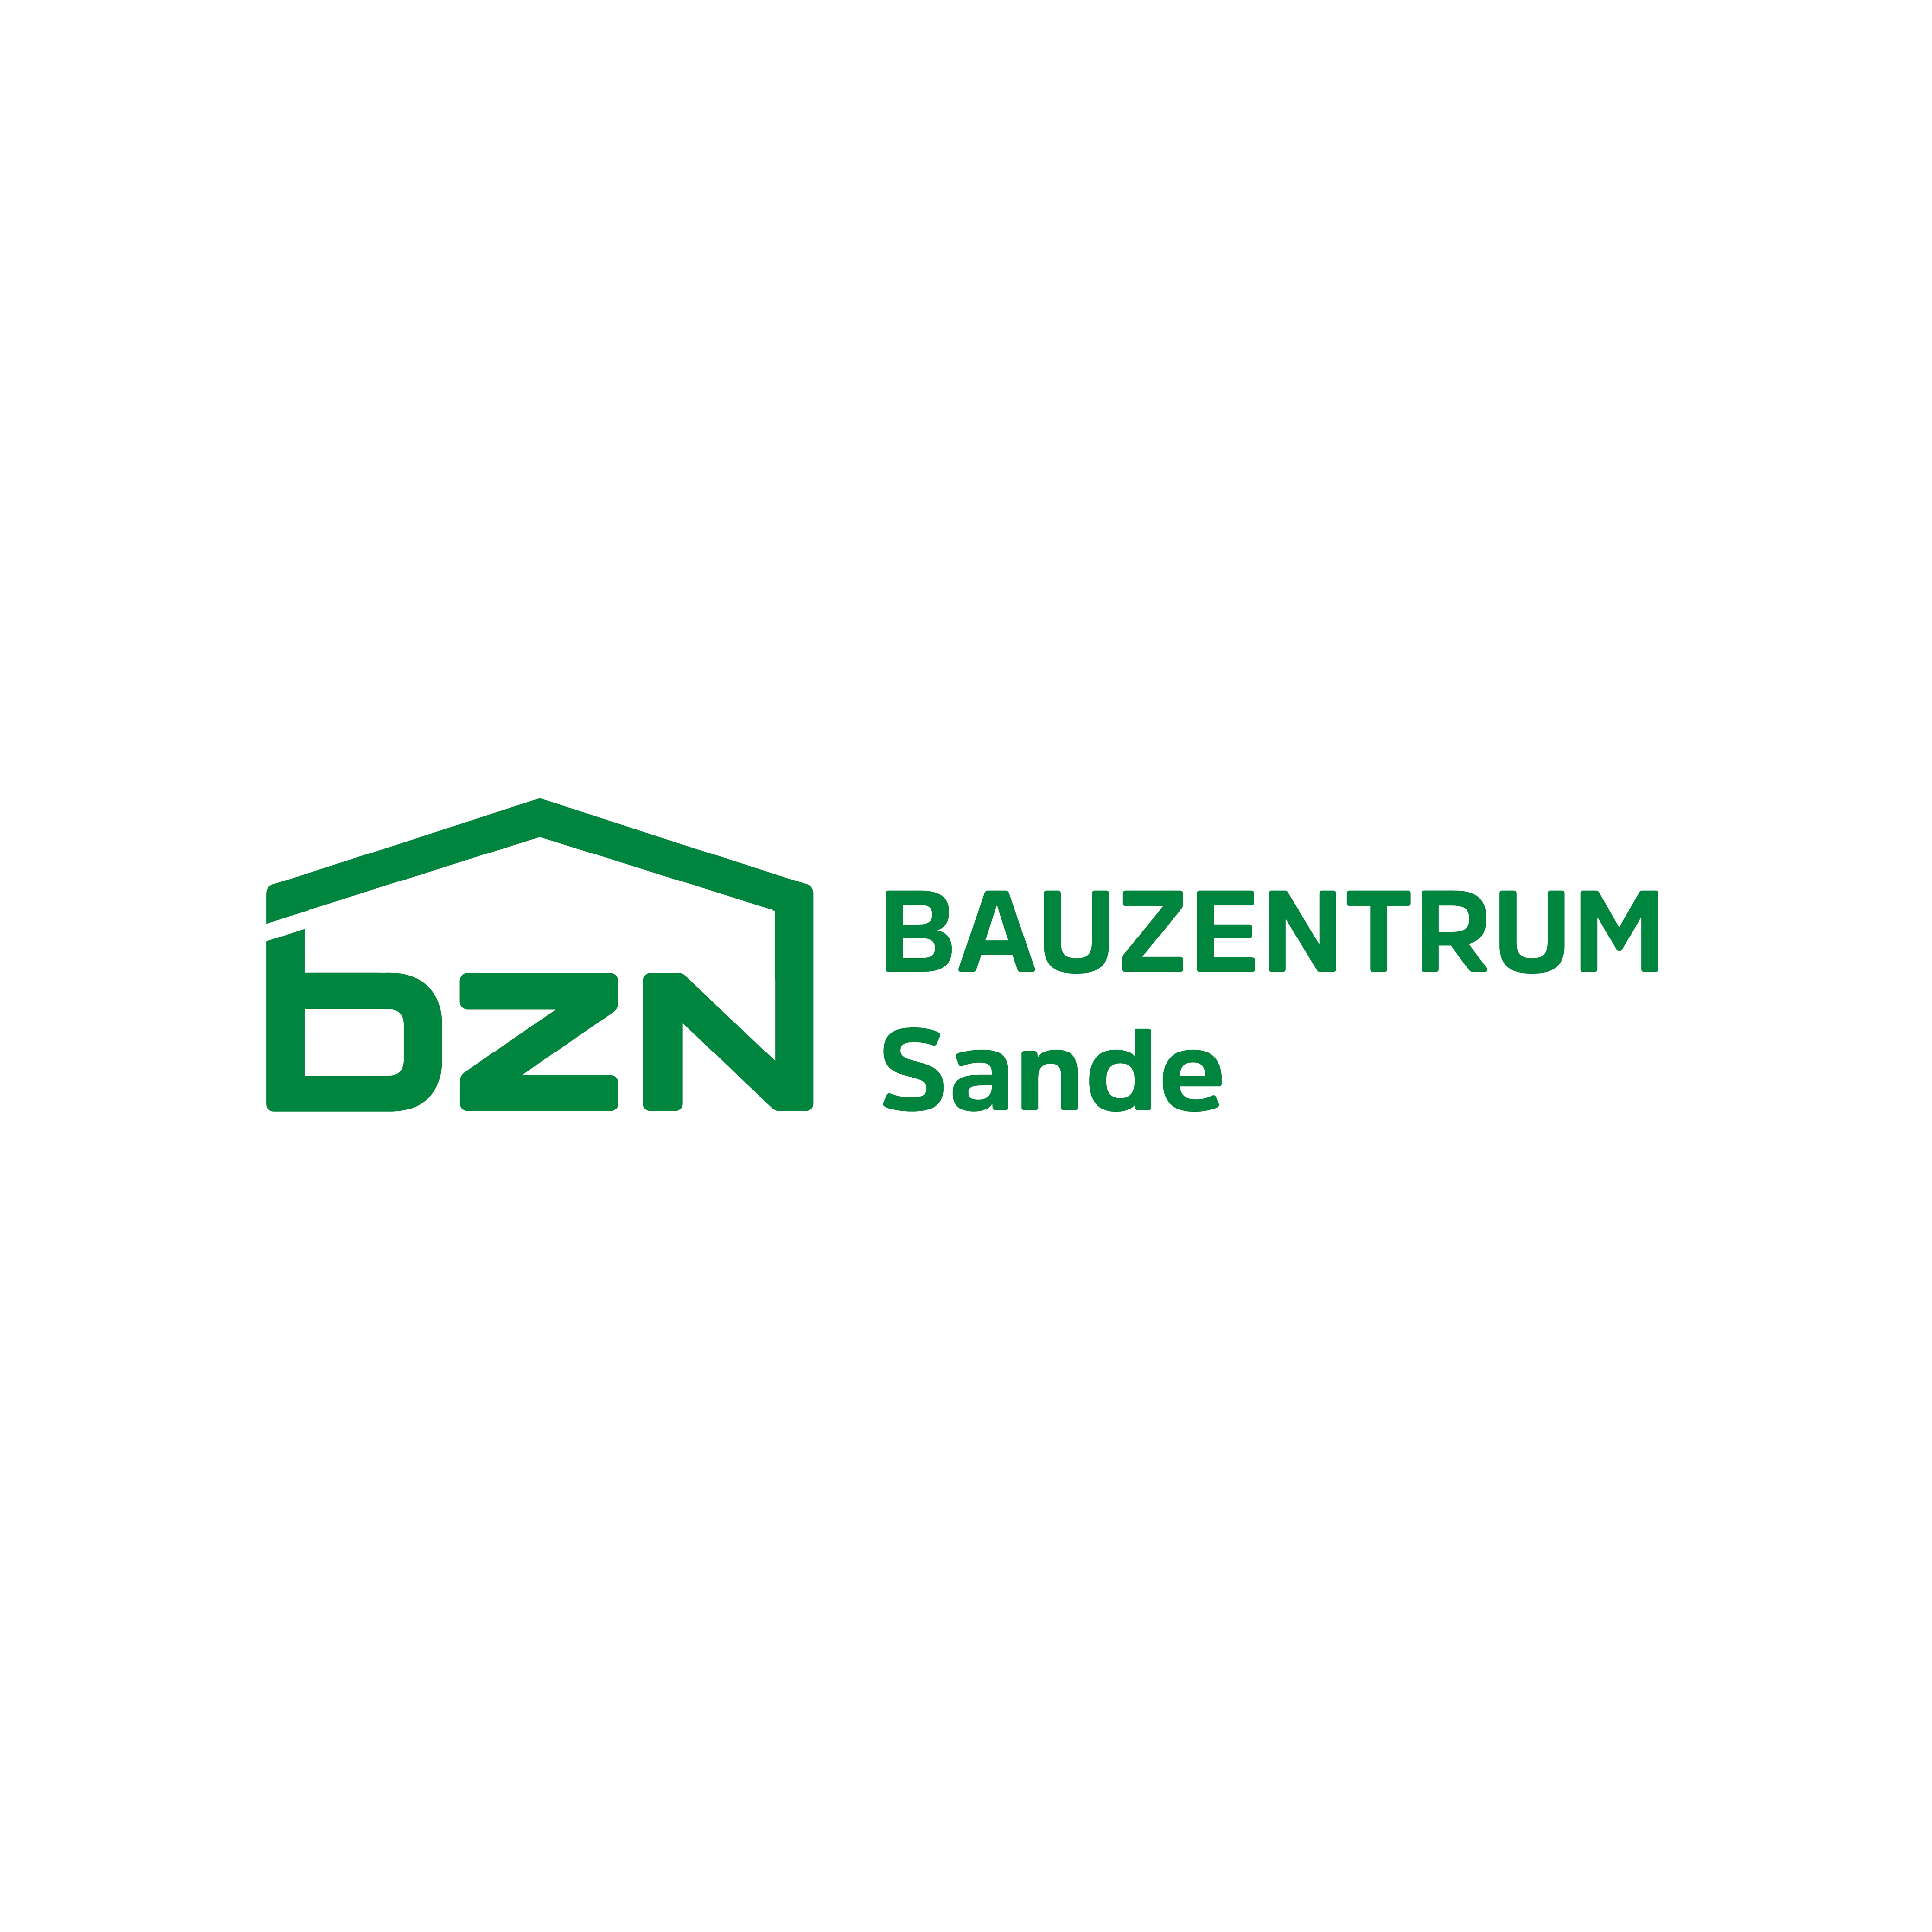 BZN Bauzentrum Sande GmbH & Co. KG Logo